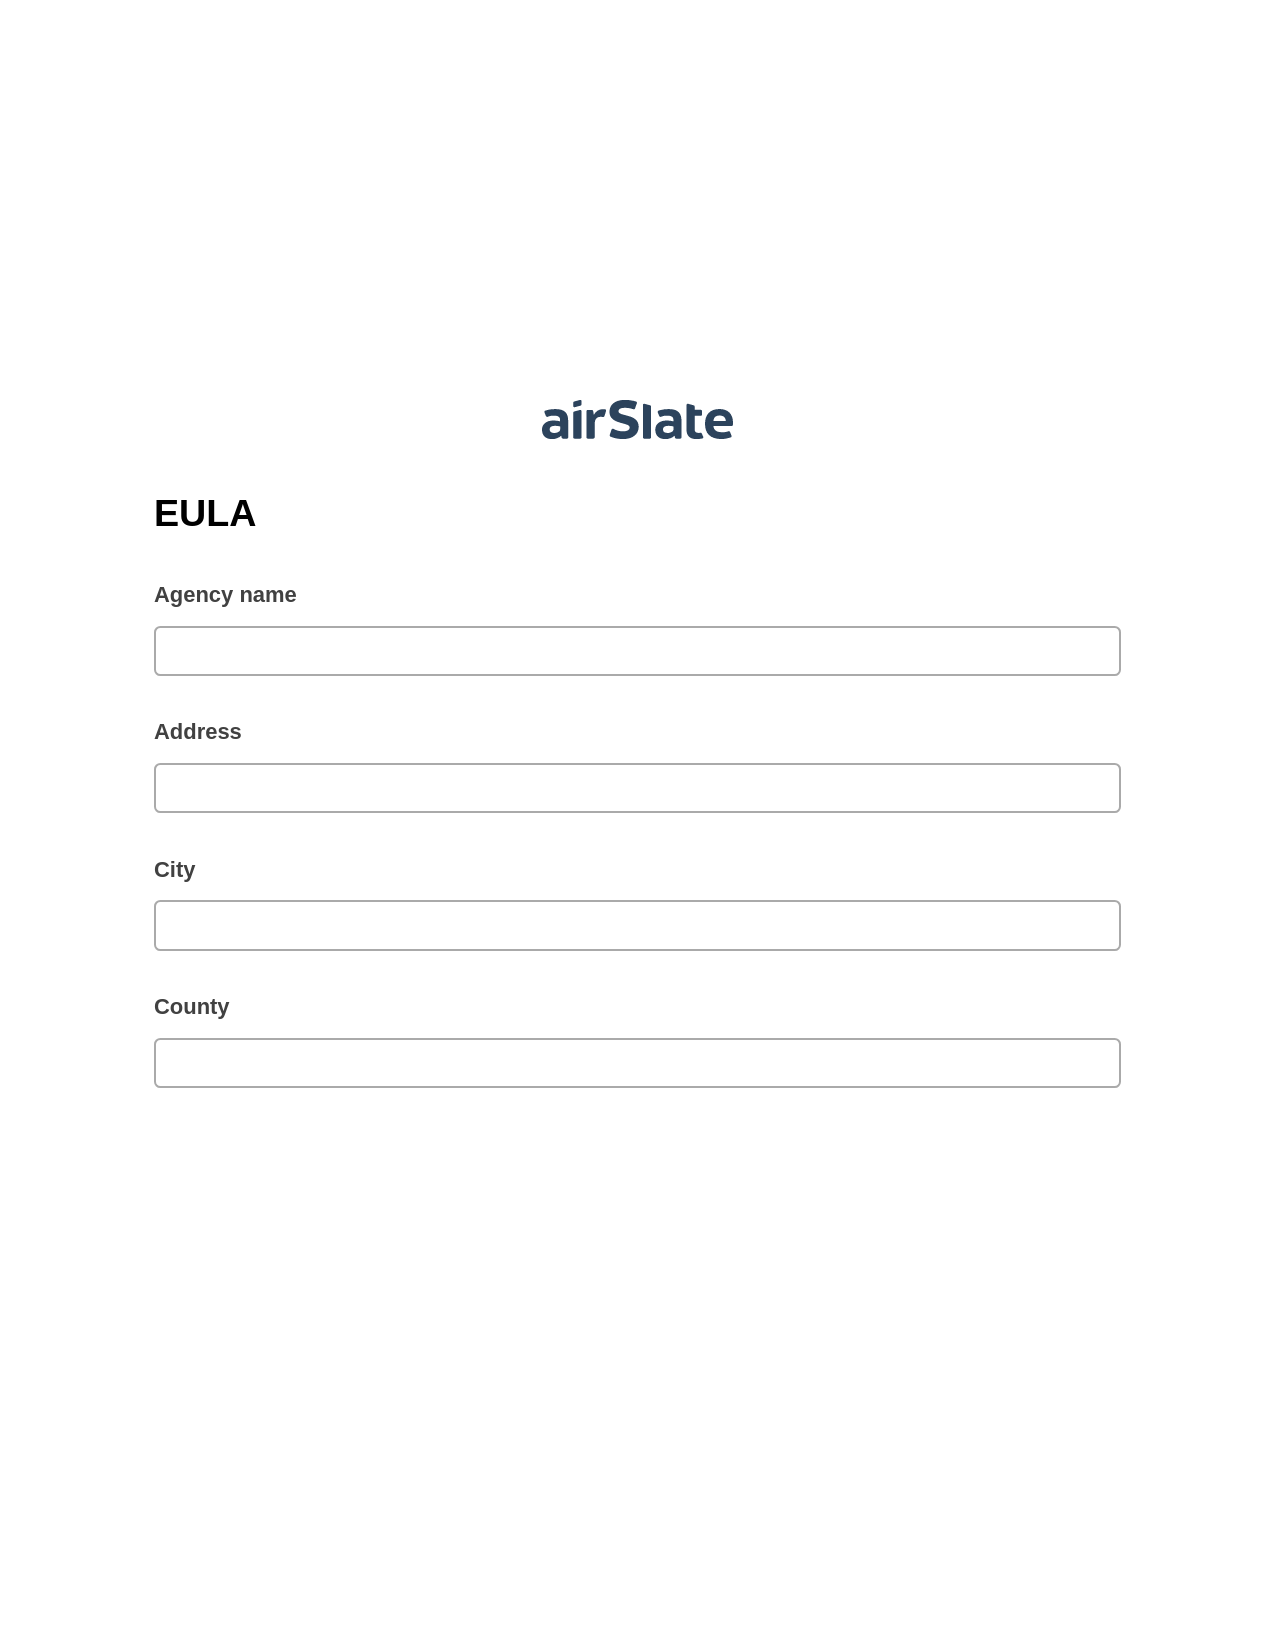 EULA Pre-fill from Google Sheet Dropdown Options Bot, Remove Slate Bot, Box Bot